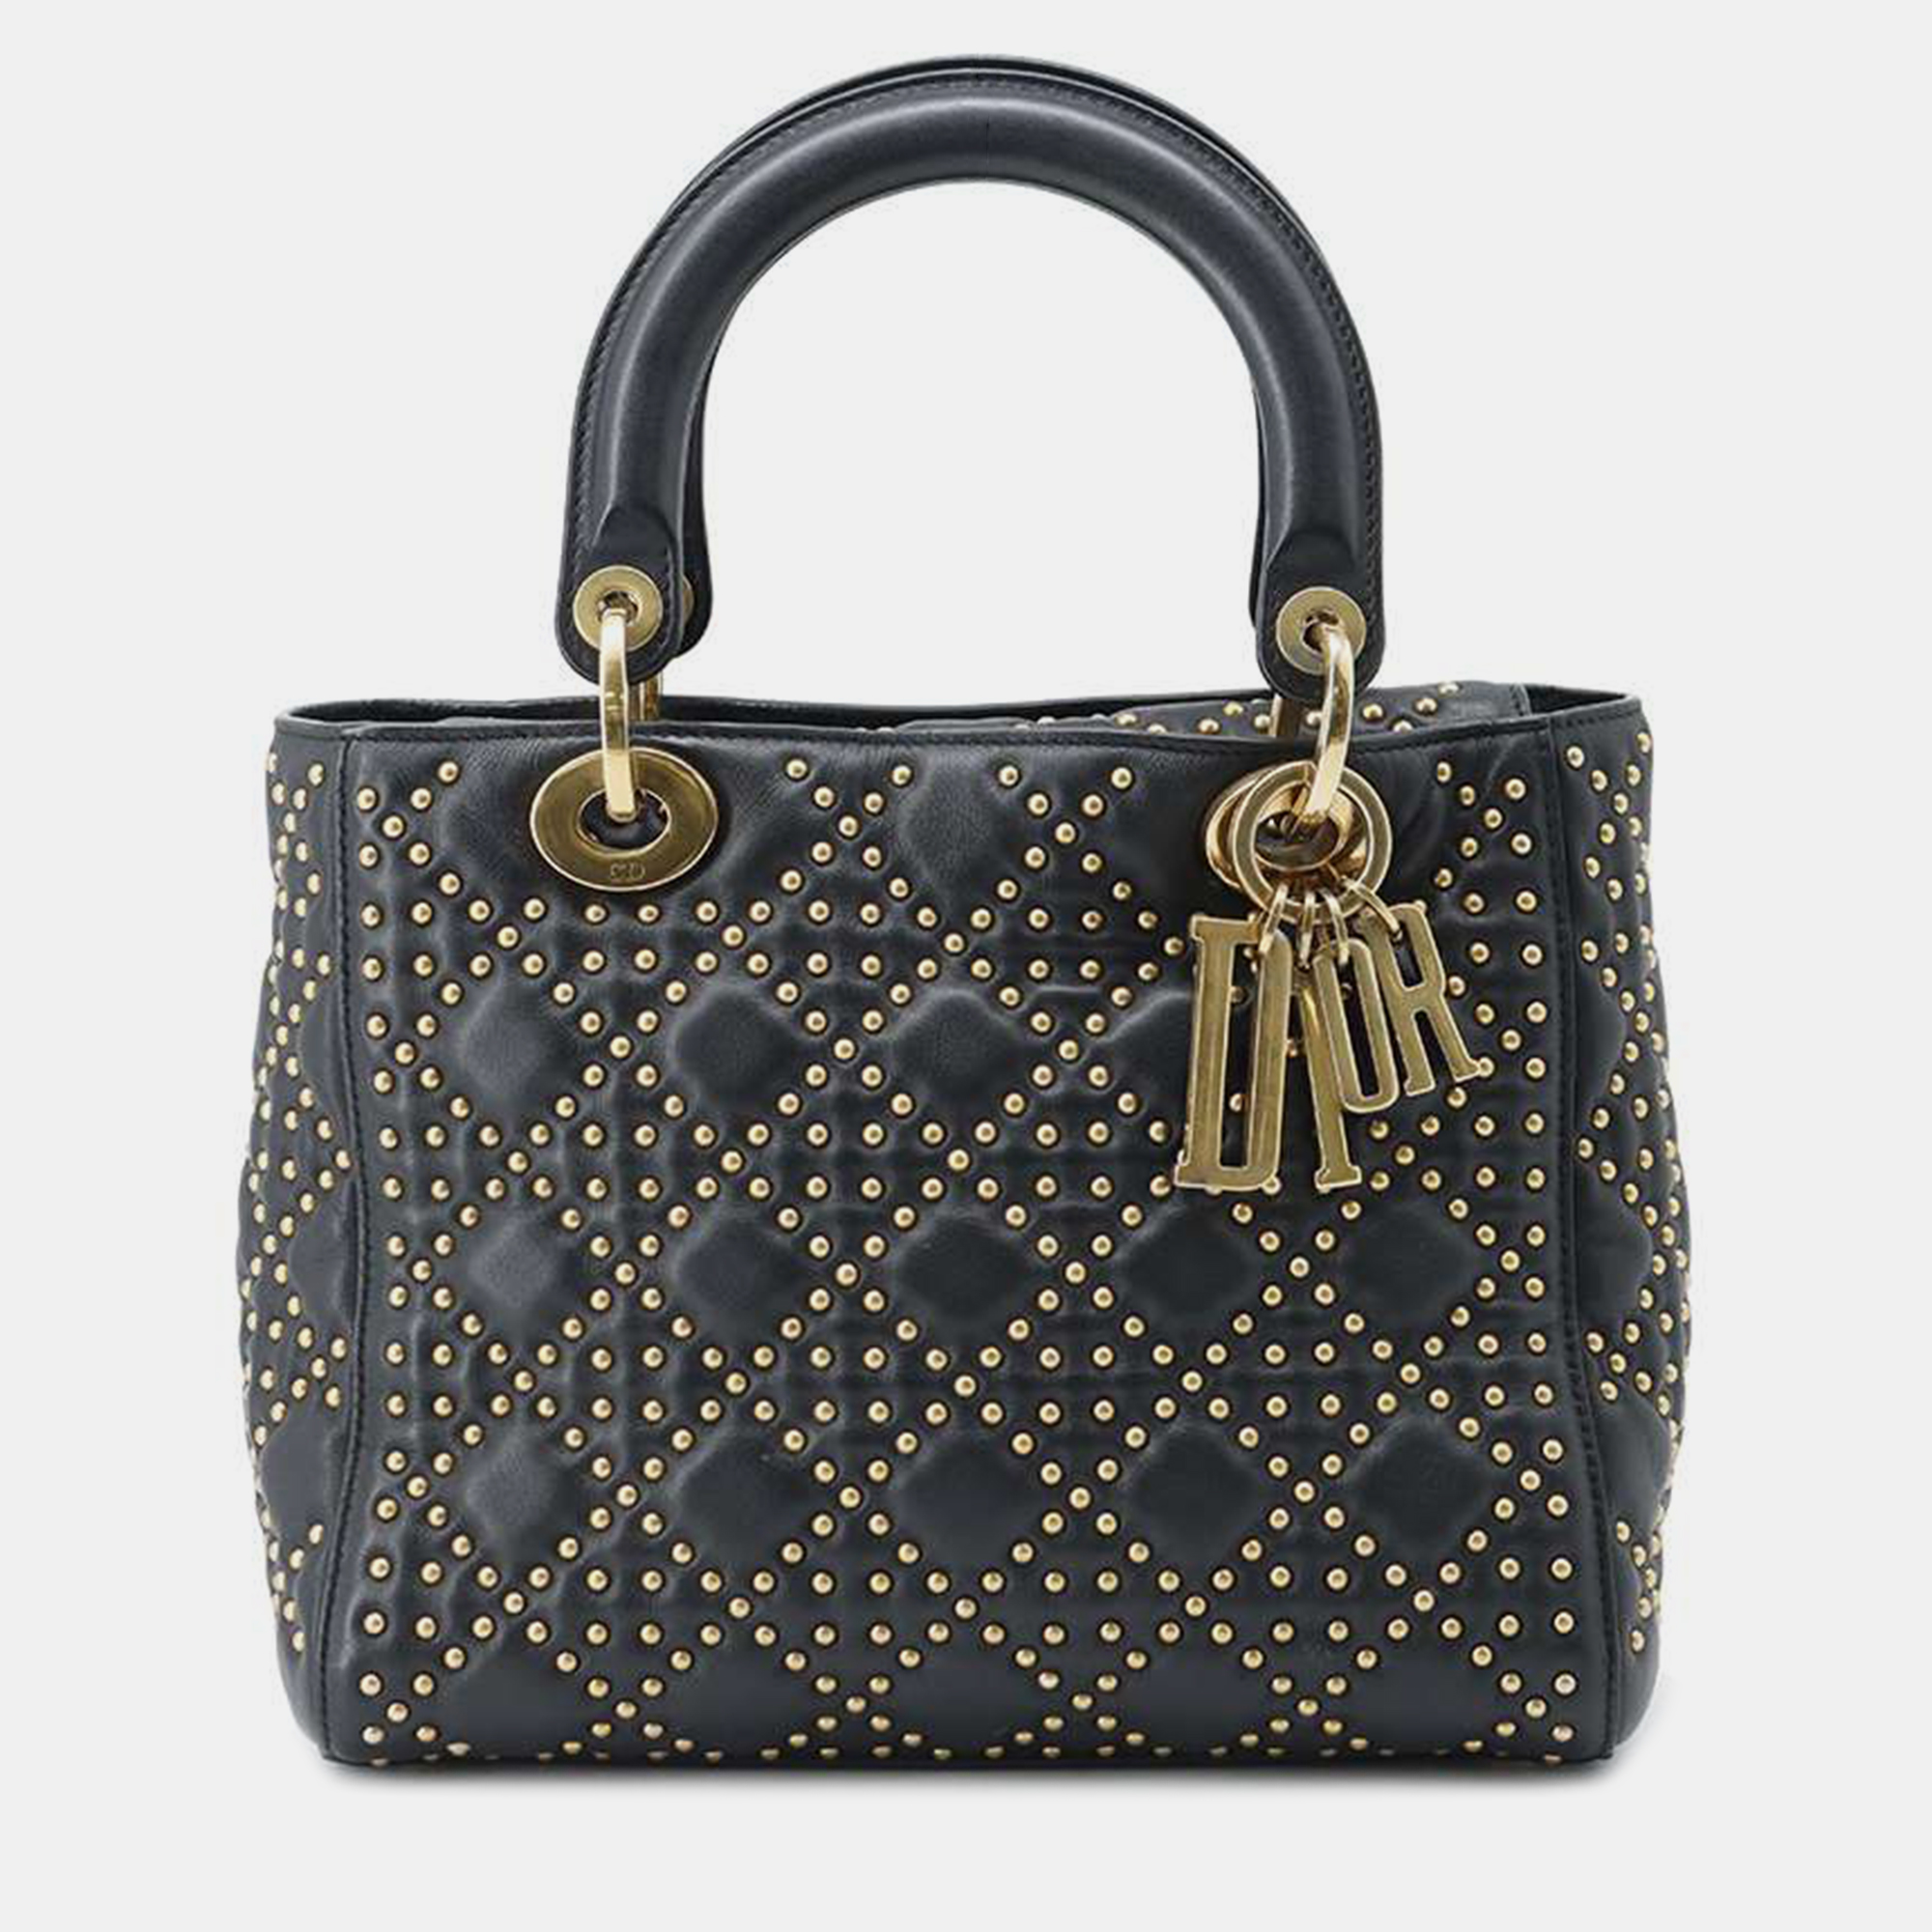 Dior black medium lady dior handbag